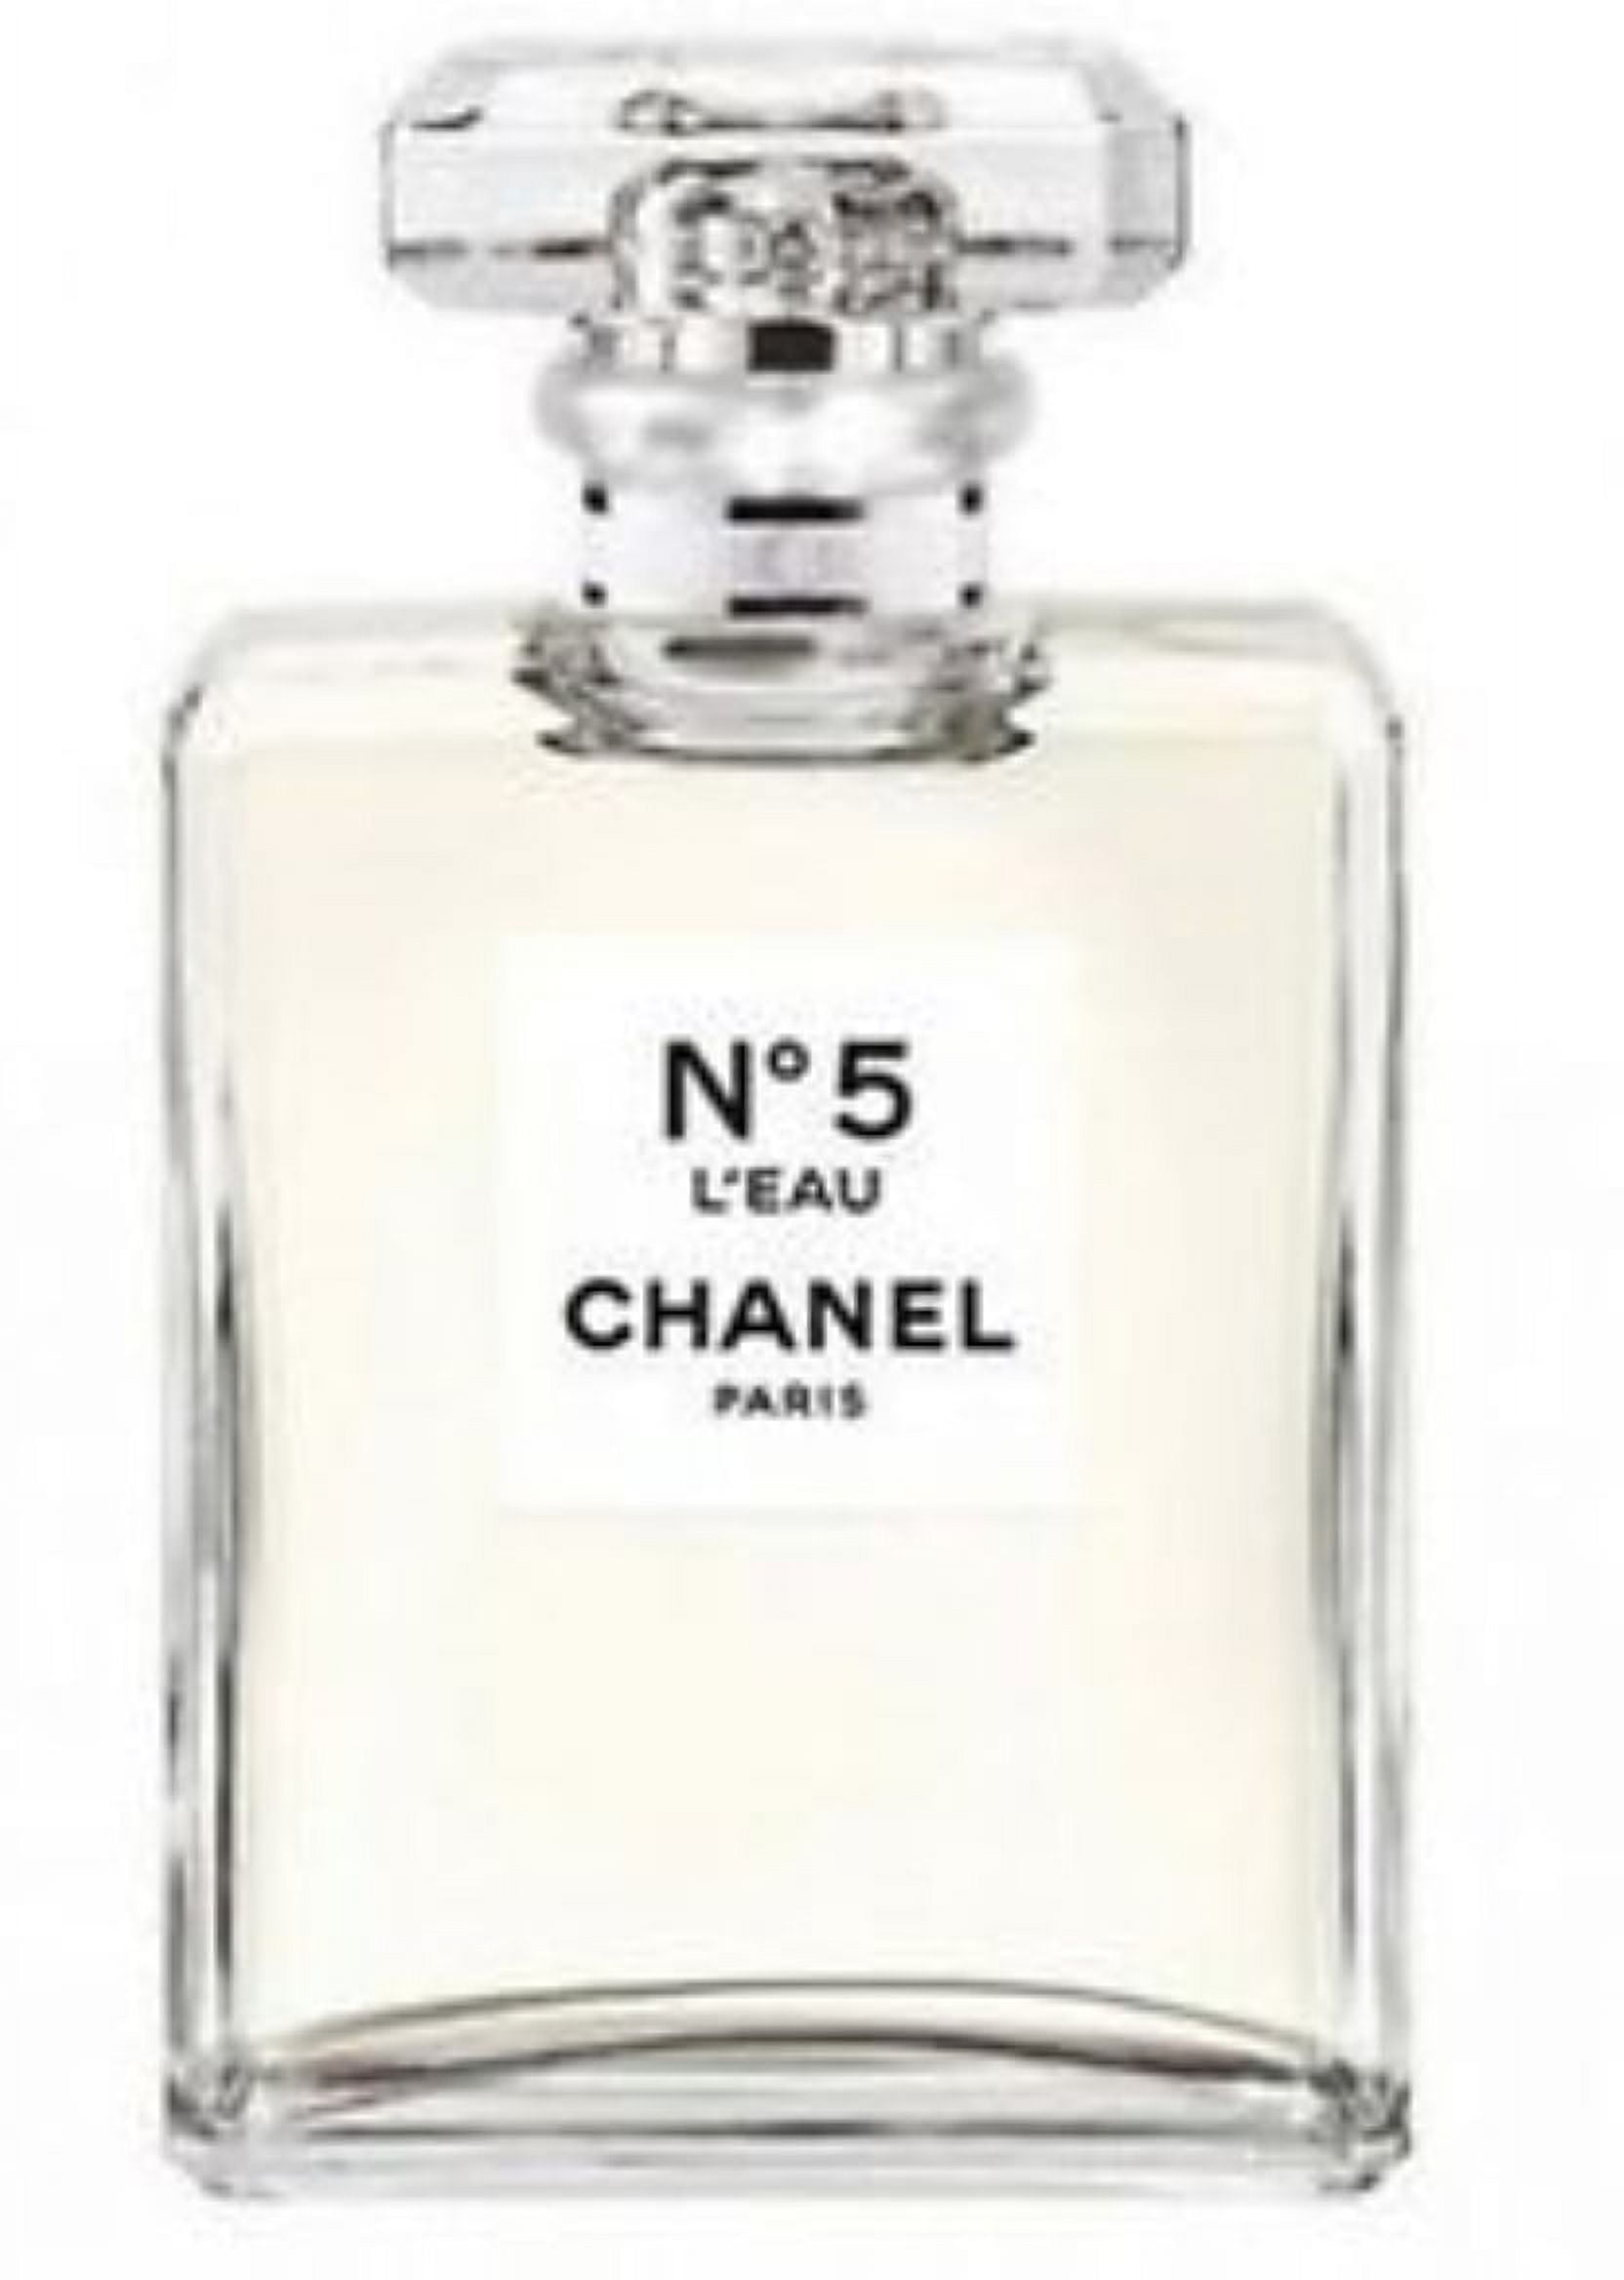 Chanel No.5 L'eau Edt Eau de Toilette Spray 50ml 1.7fl.oz FRESH